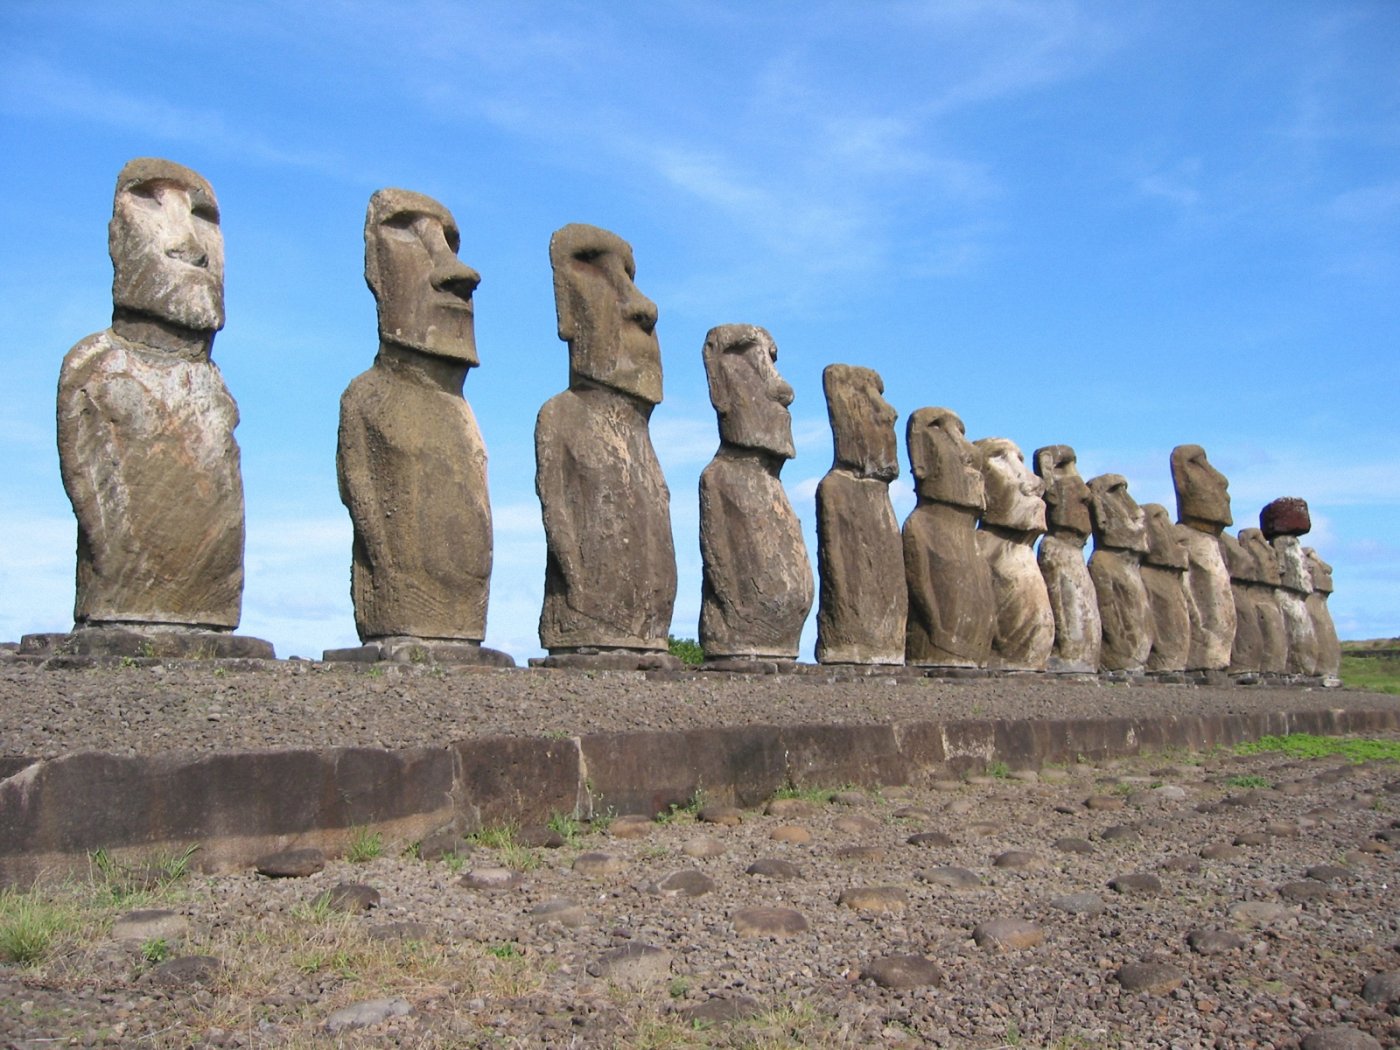 Easter Island 1400x1050 WallpapersEaster Island 1400x1050 Wallpapers 1400x1050